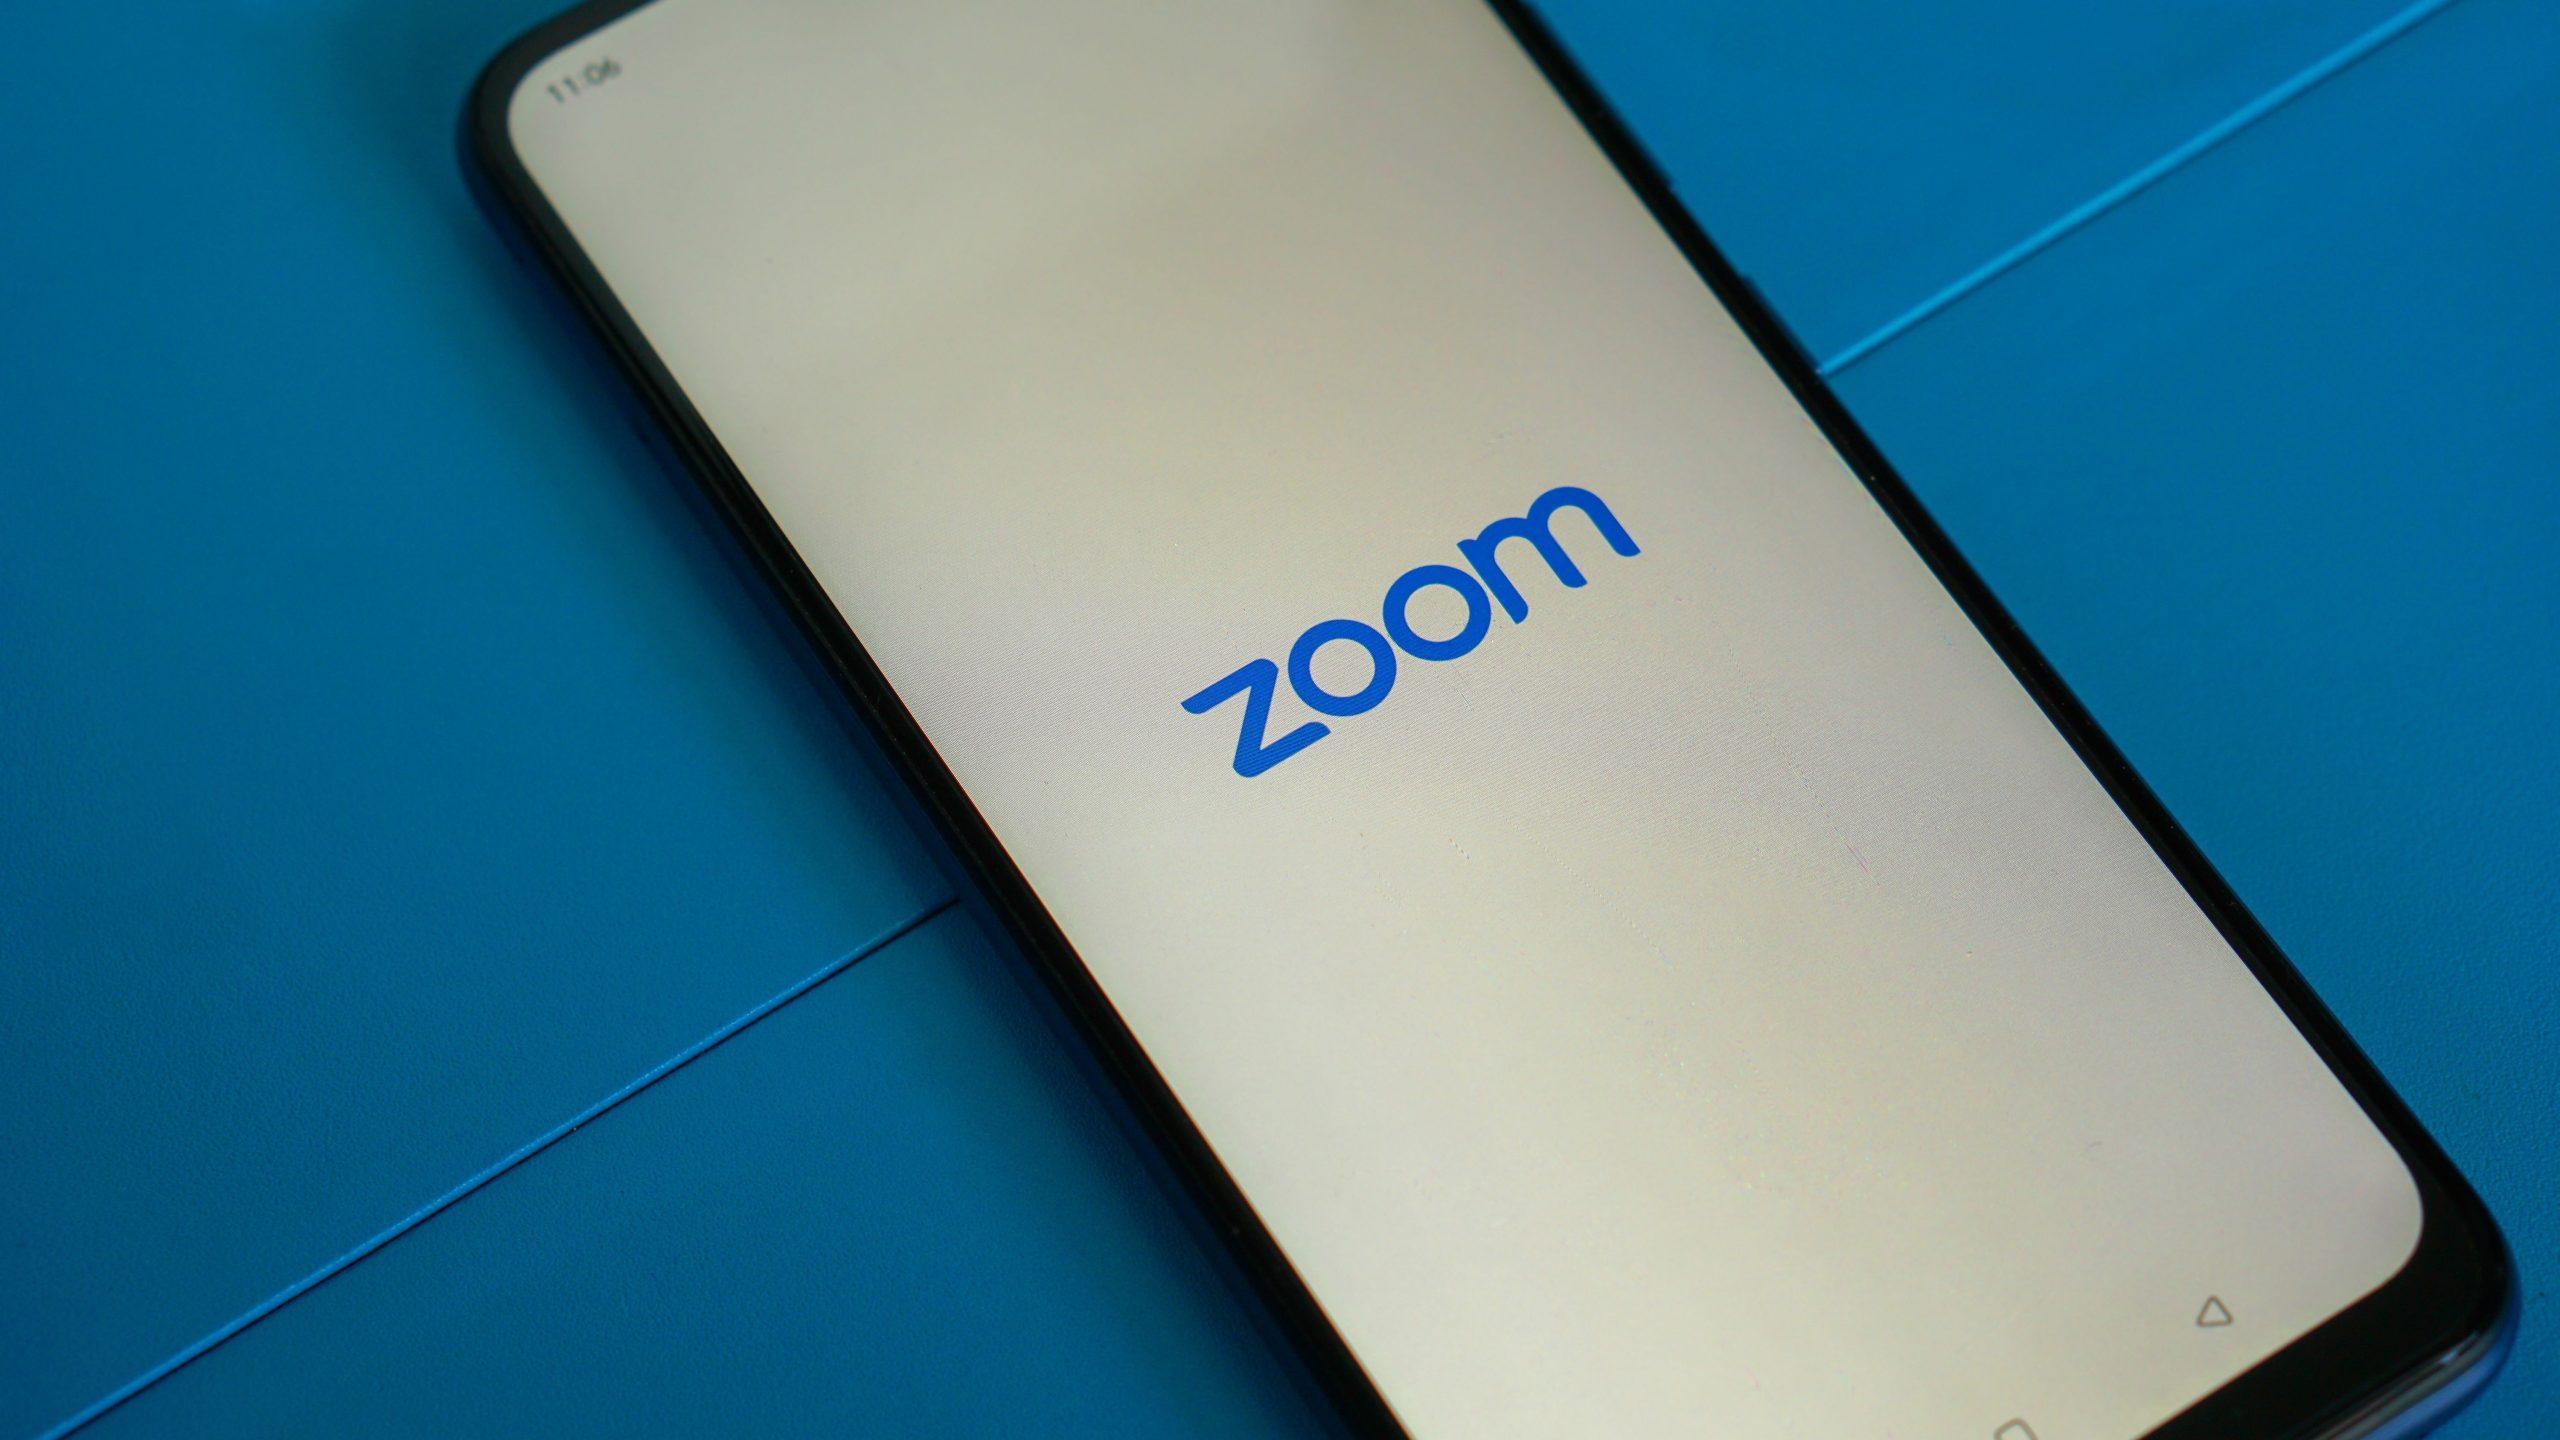 Smartphone displaying the Zoom logo.